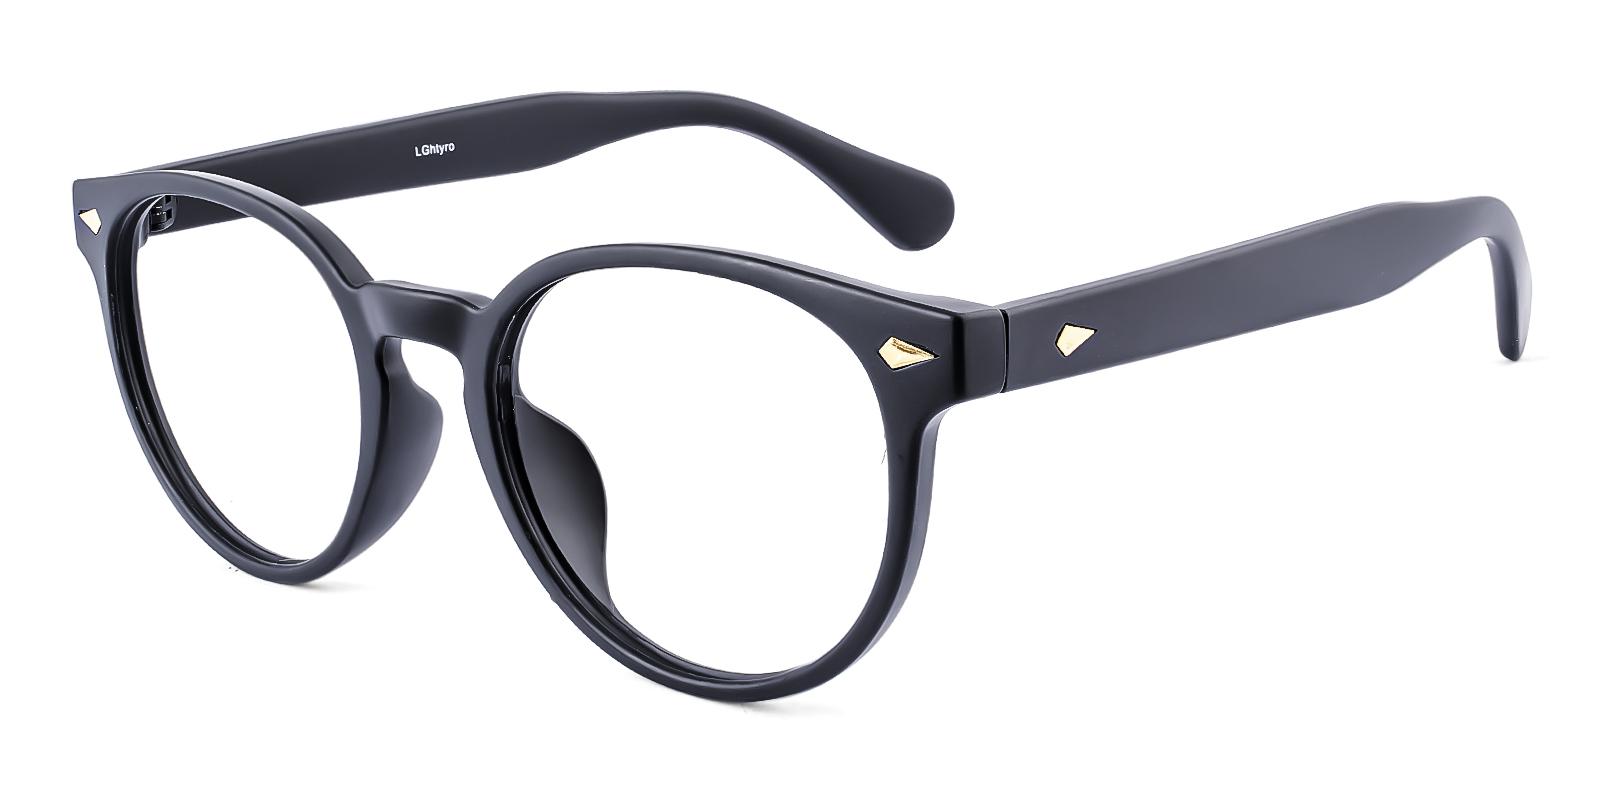 Hismost Matte-black Plastic Eyeglasses , UniversalBridgeFit Frames from ABBE Glasses